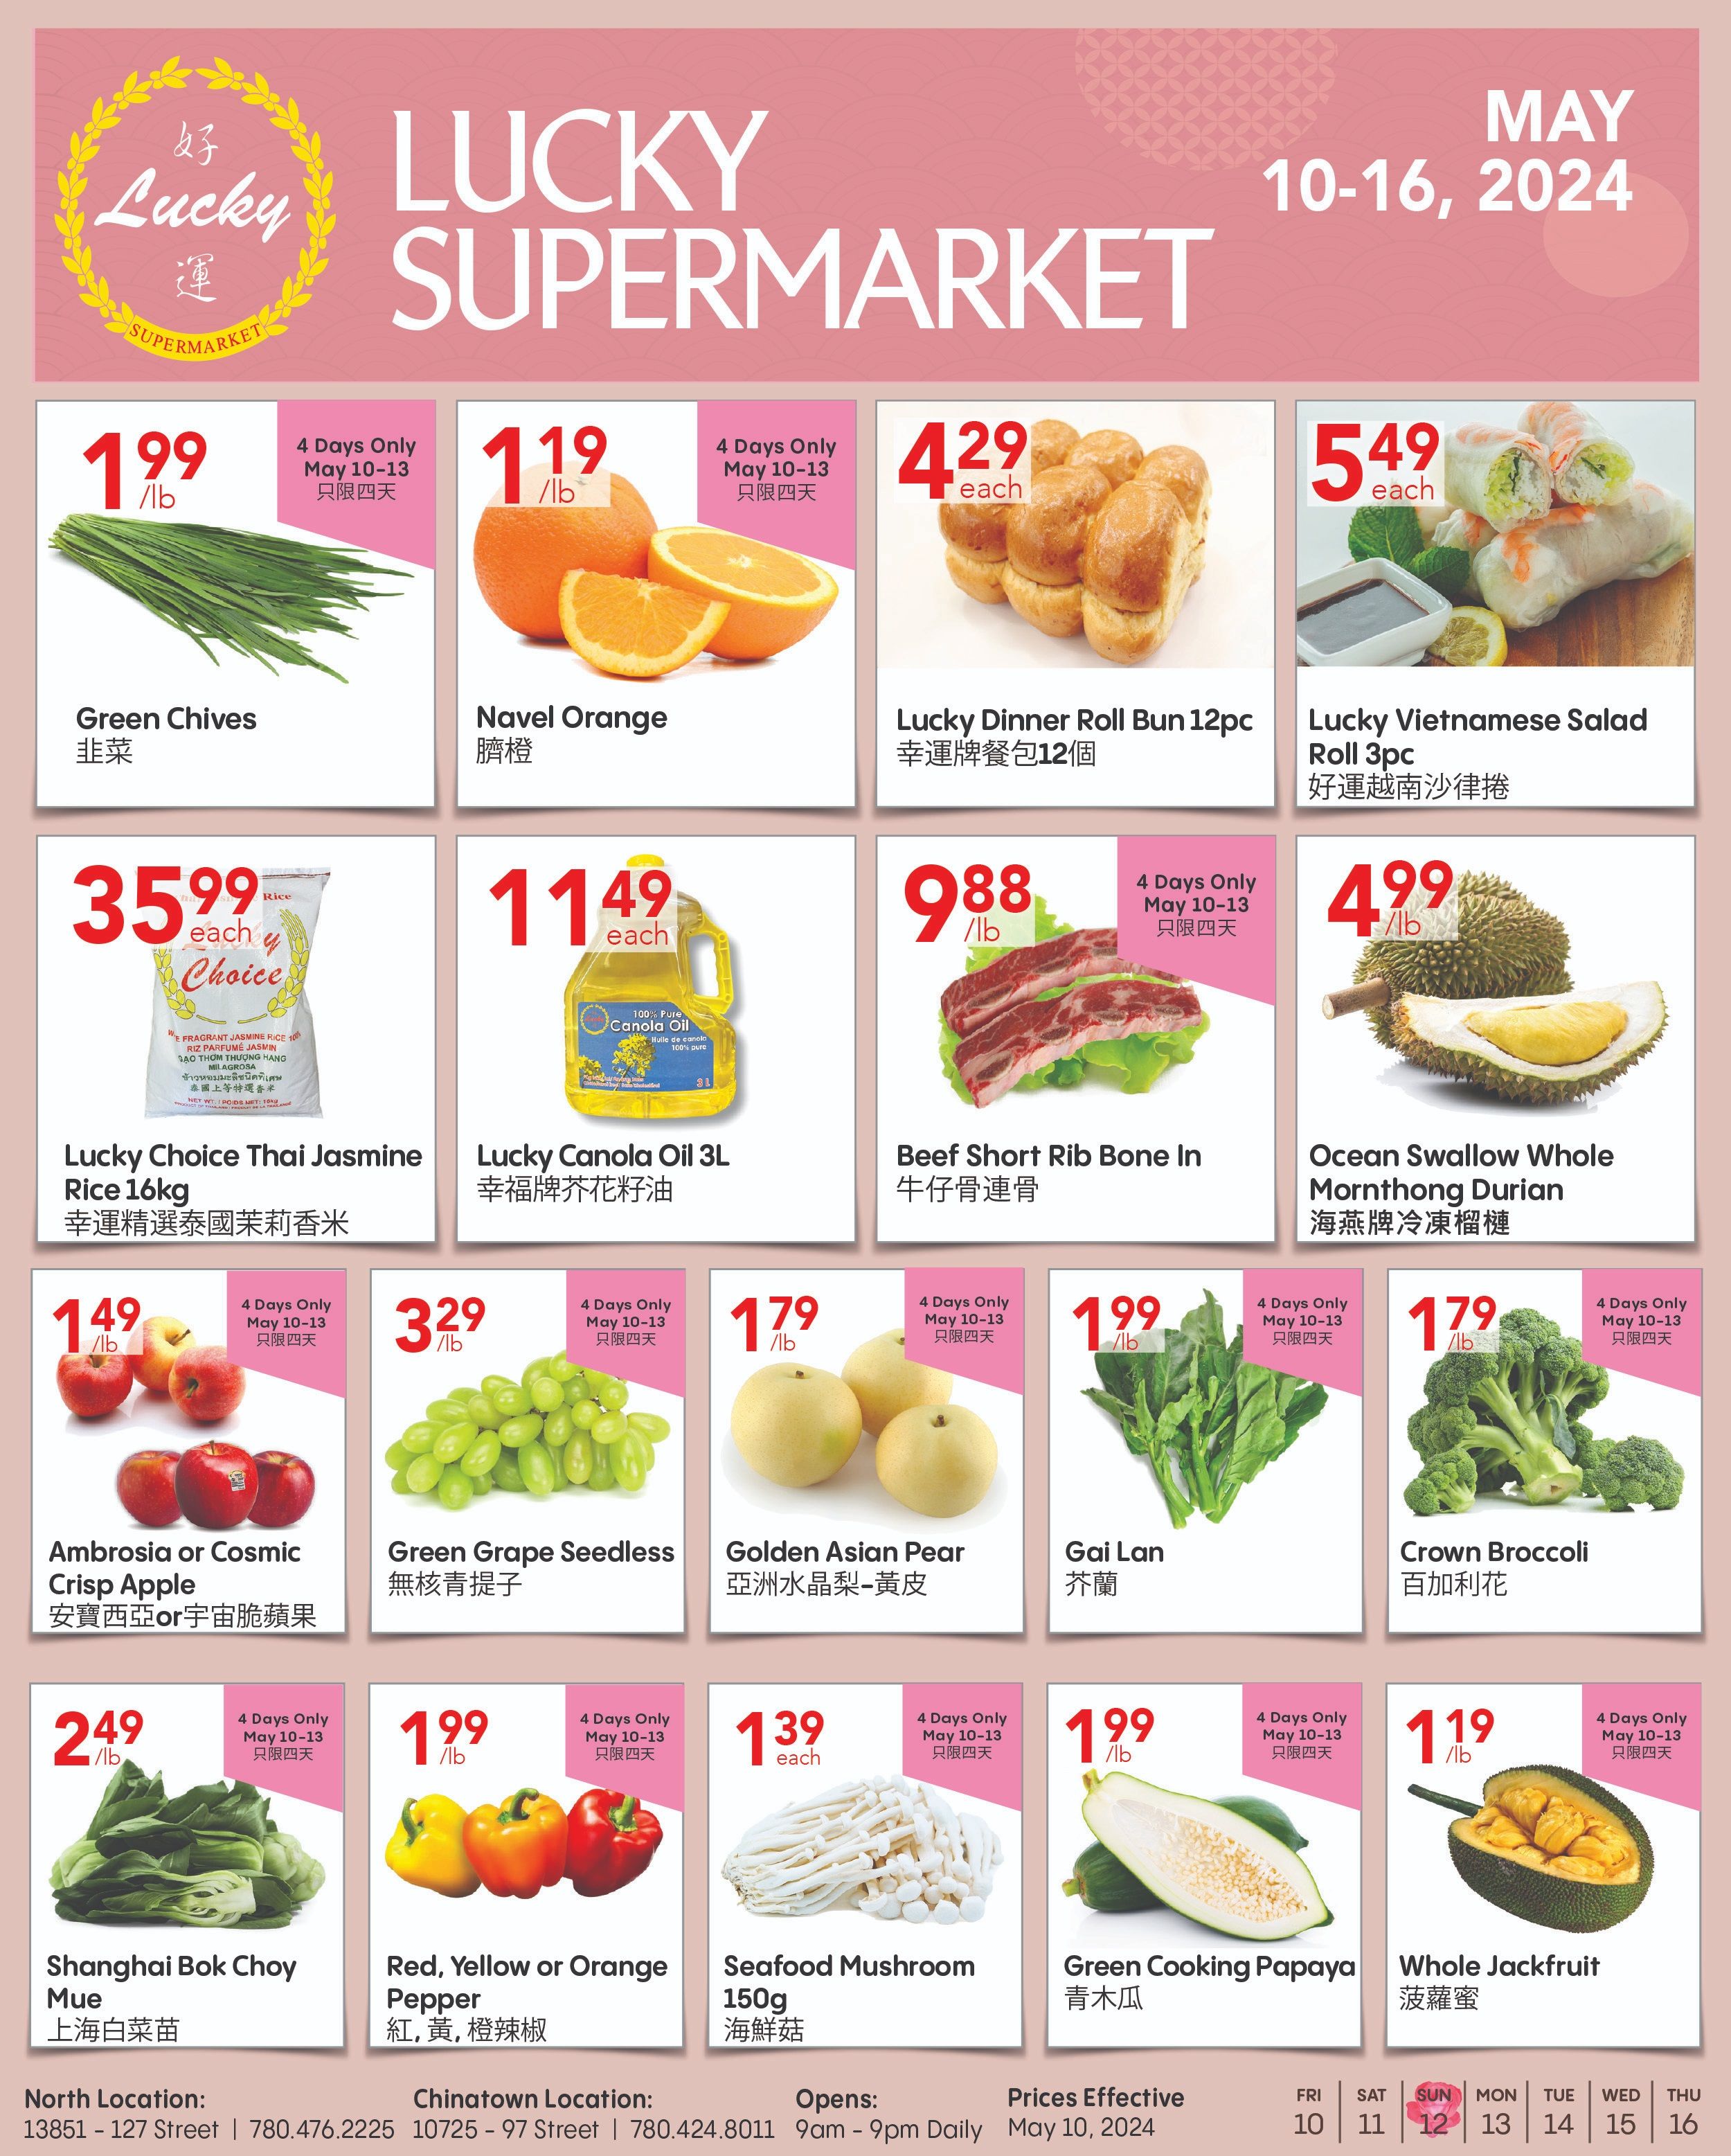 Lucky Supermarket - Edmonton - Weekly Flyer Specials